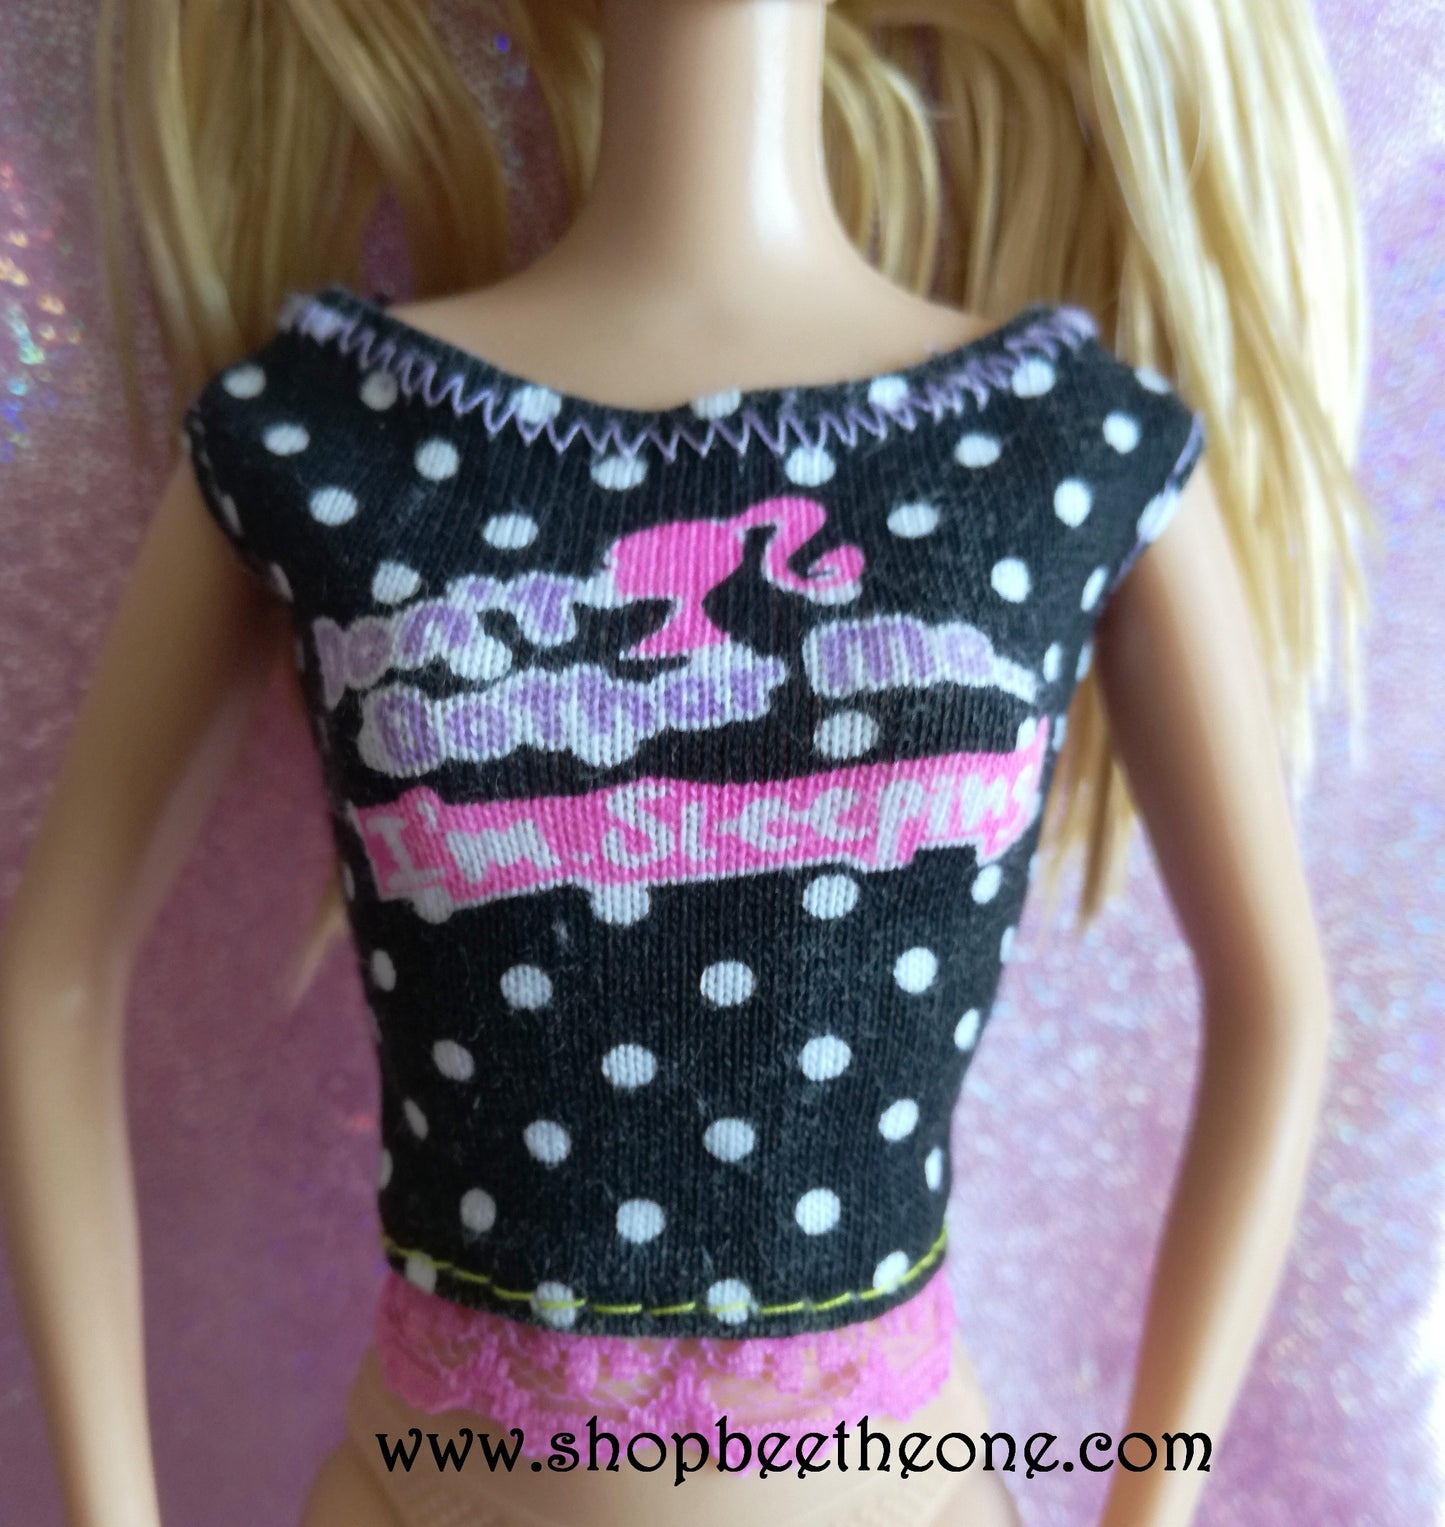 Barbie Fashionistas "Big Dreams" Sleepwear Fashion pack - Mattel 2013 - Top